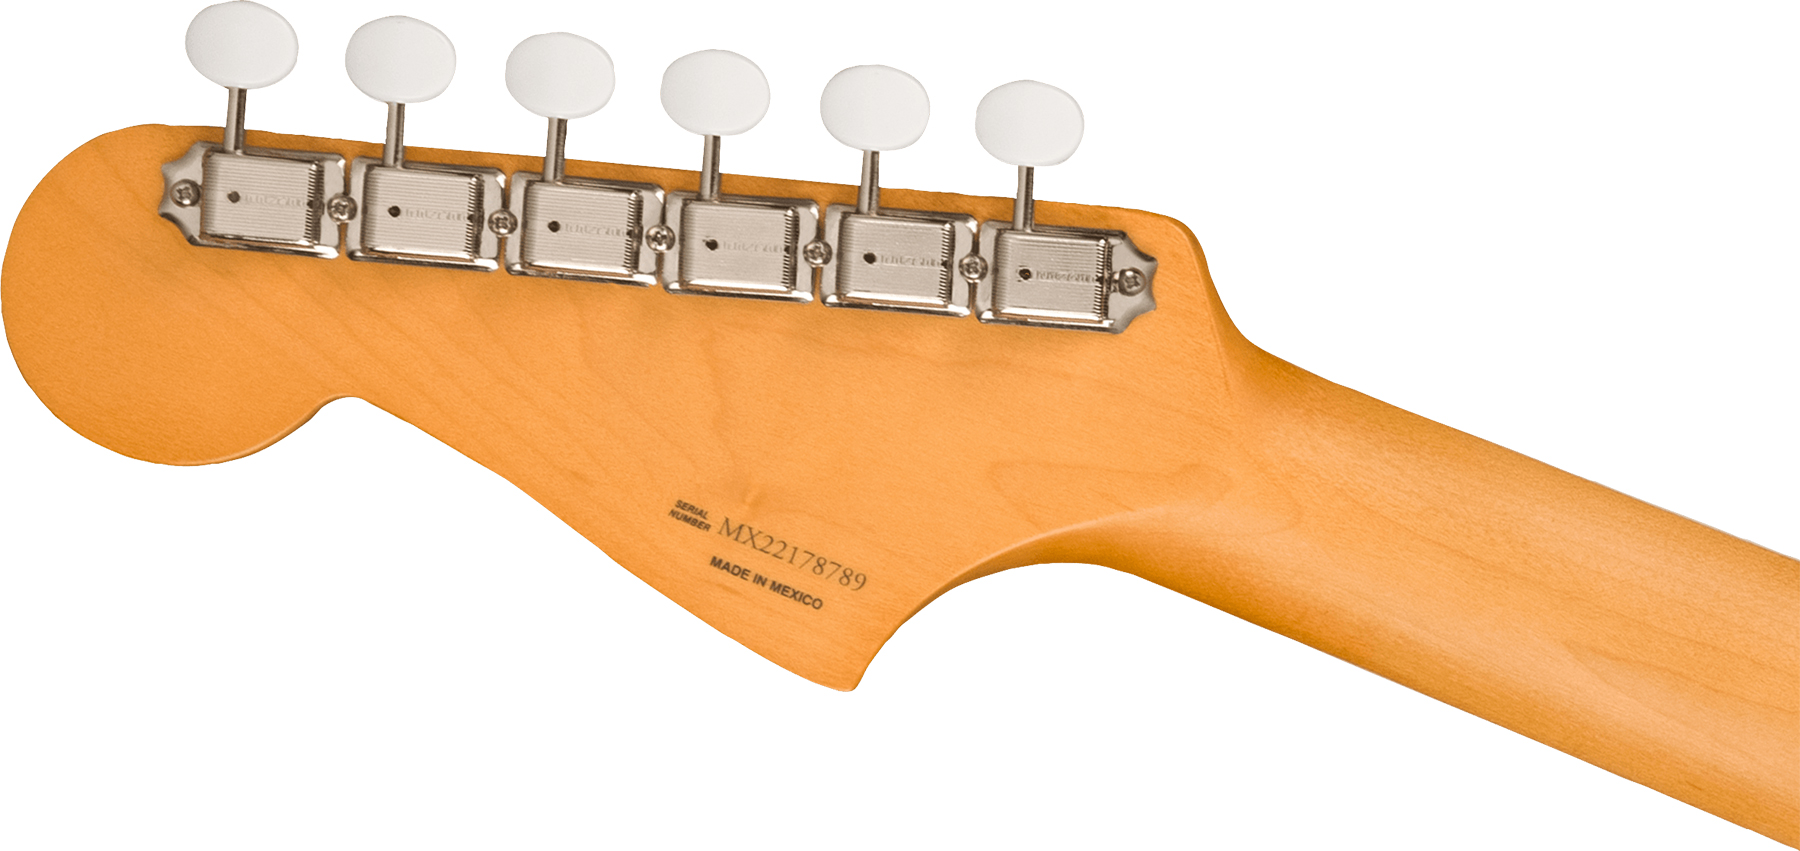 Fender Jazzmaster Gold Foil Ltd Mex 3mh Trem Bigsby Eb - Candy Apple Burst - Guitarra electrica retro rock - Variation 3